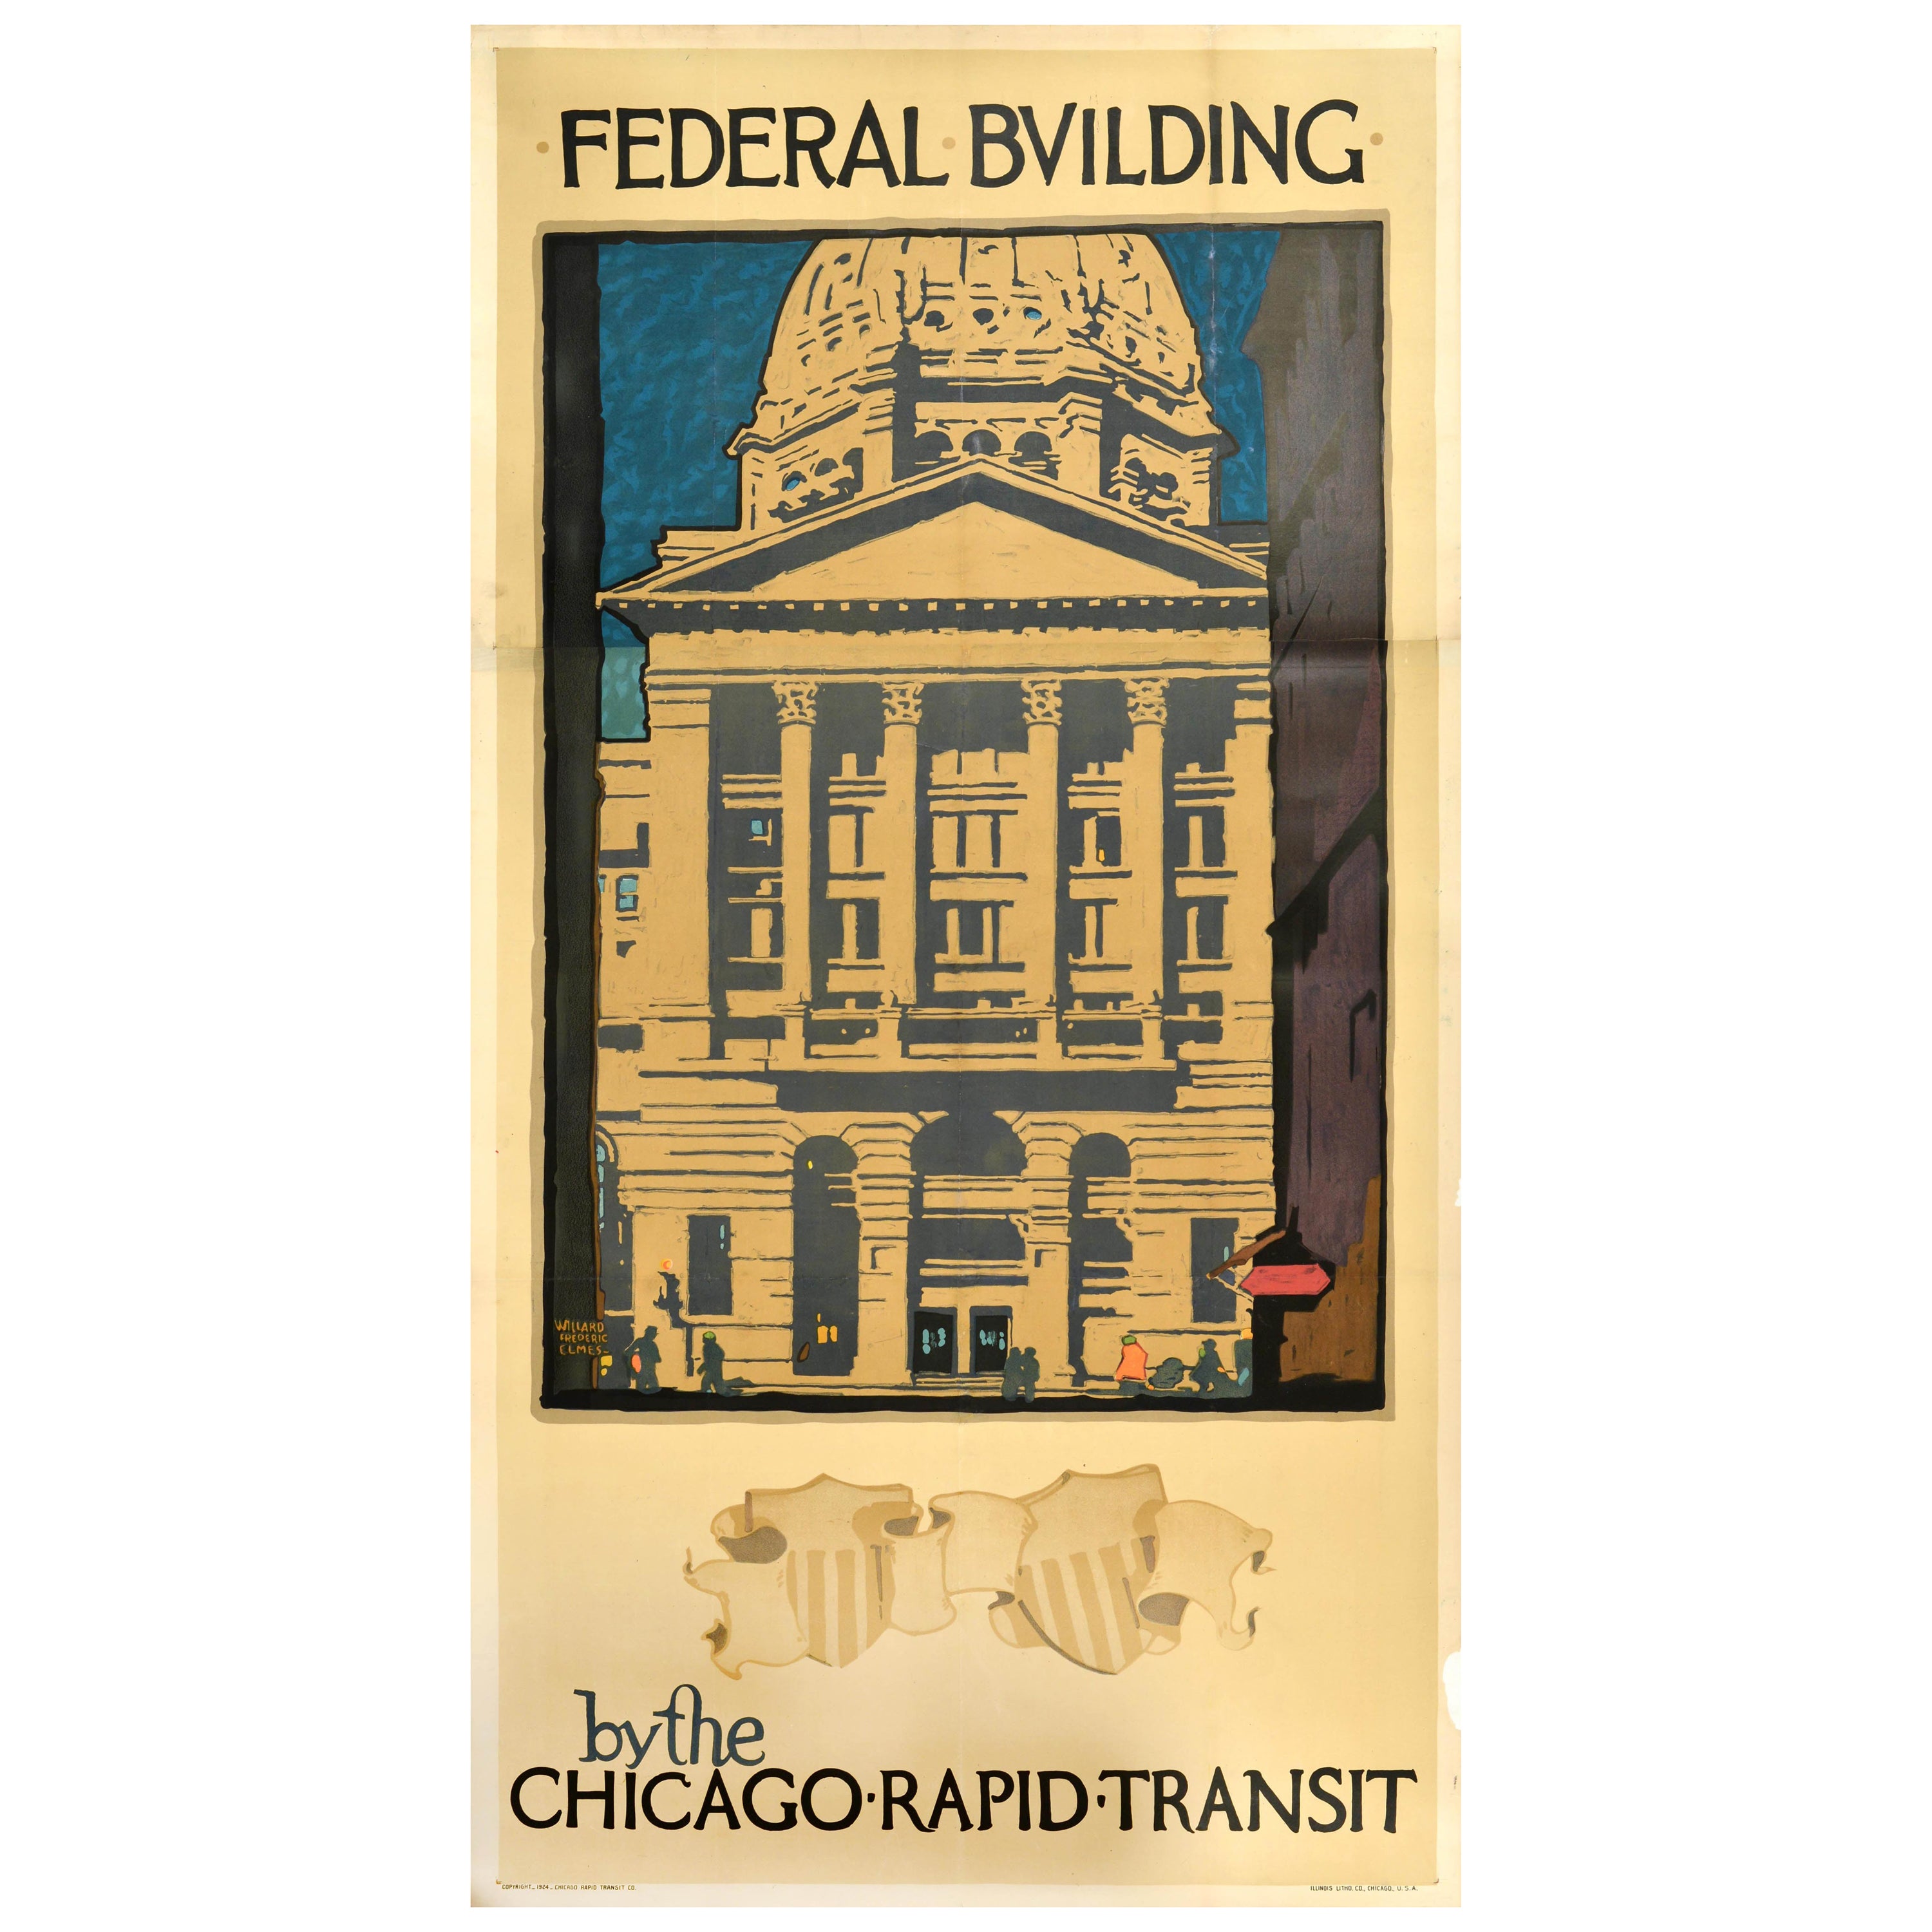 Original Vintage Travel Poster Federal Building Chicago Rapid Transit Illinois For Sale